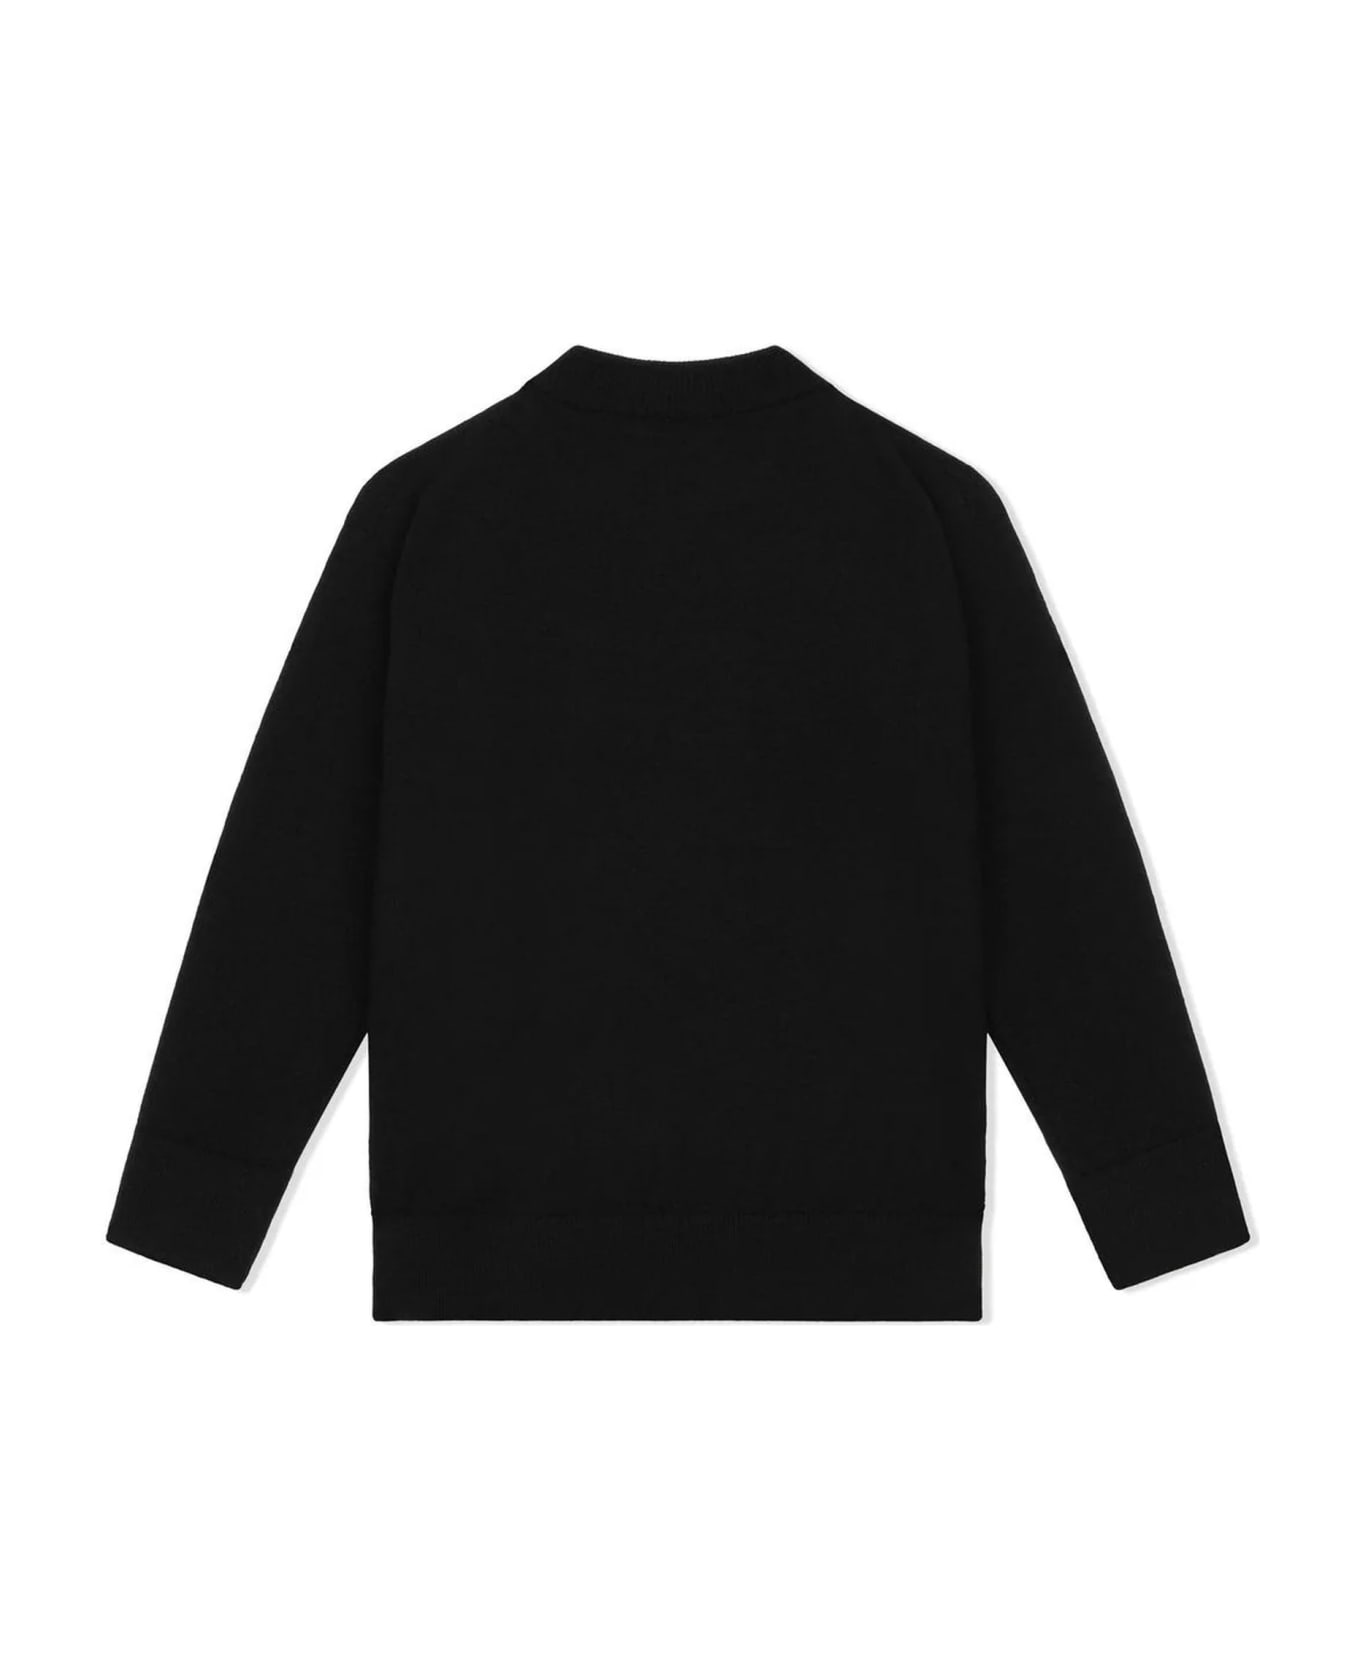 Dolce & Gabbana Black Wool Jumper - Variante